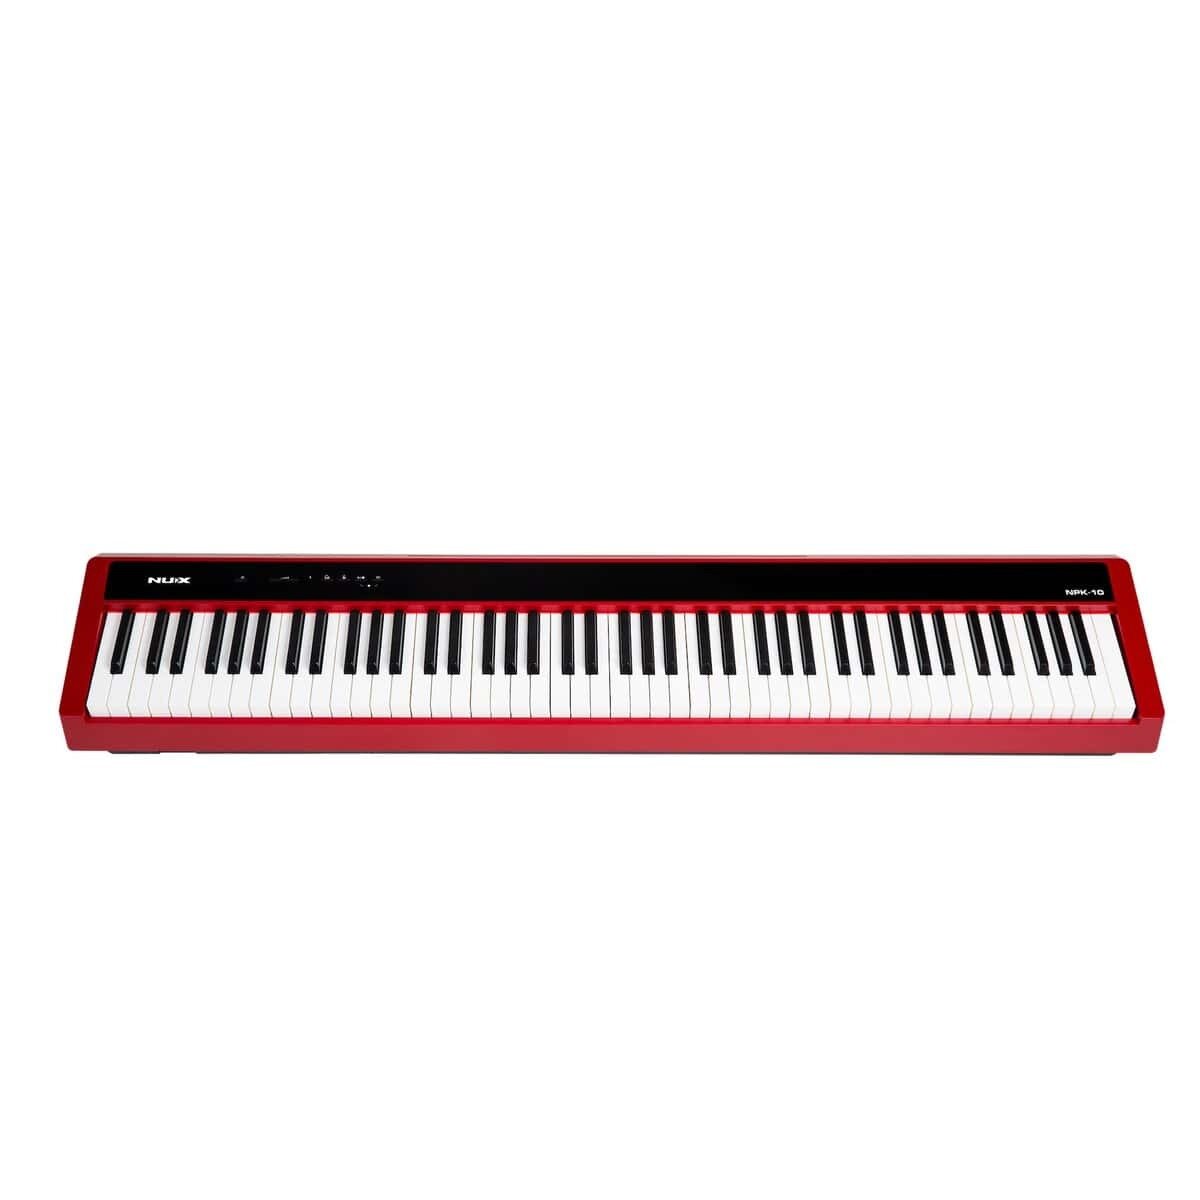 NUX NPK-20 RED Digital Piano 88 Keys : photo 1